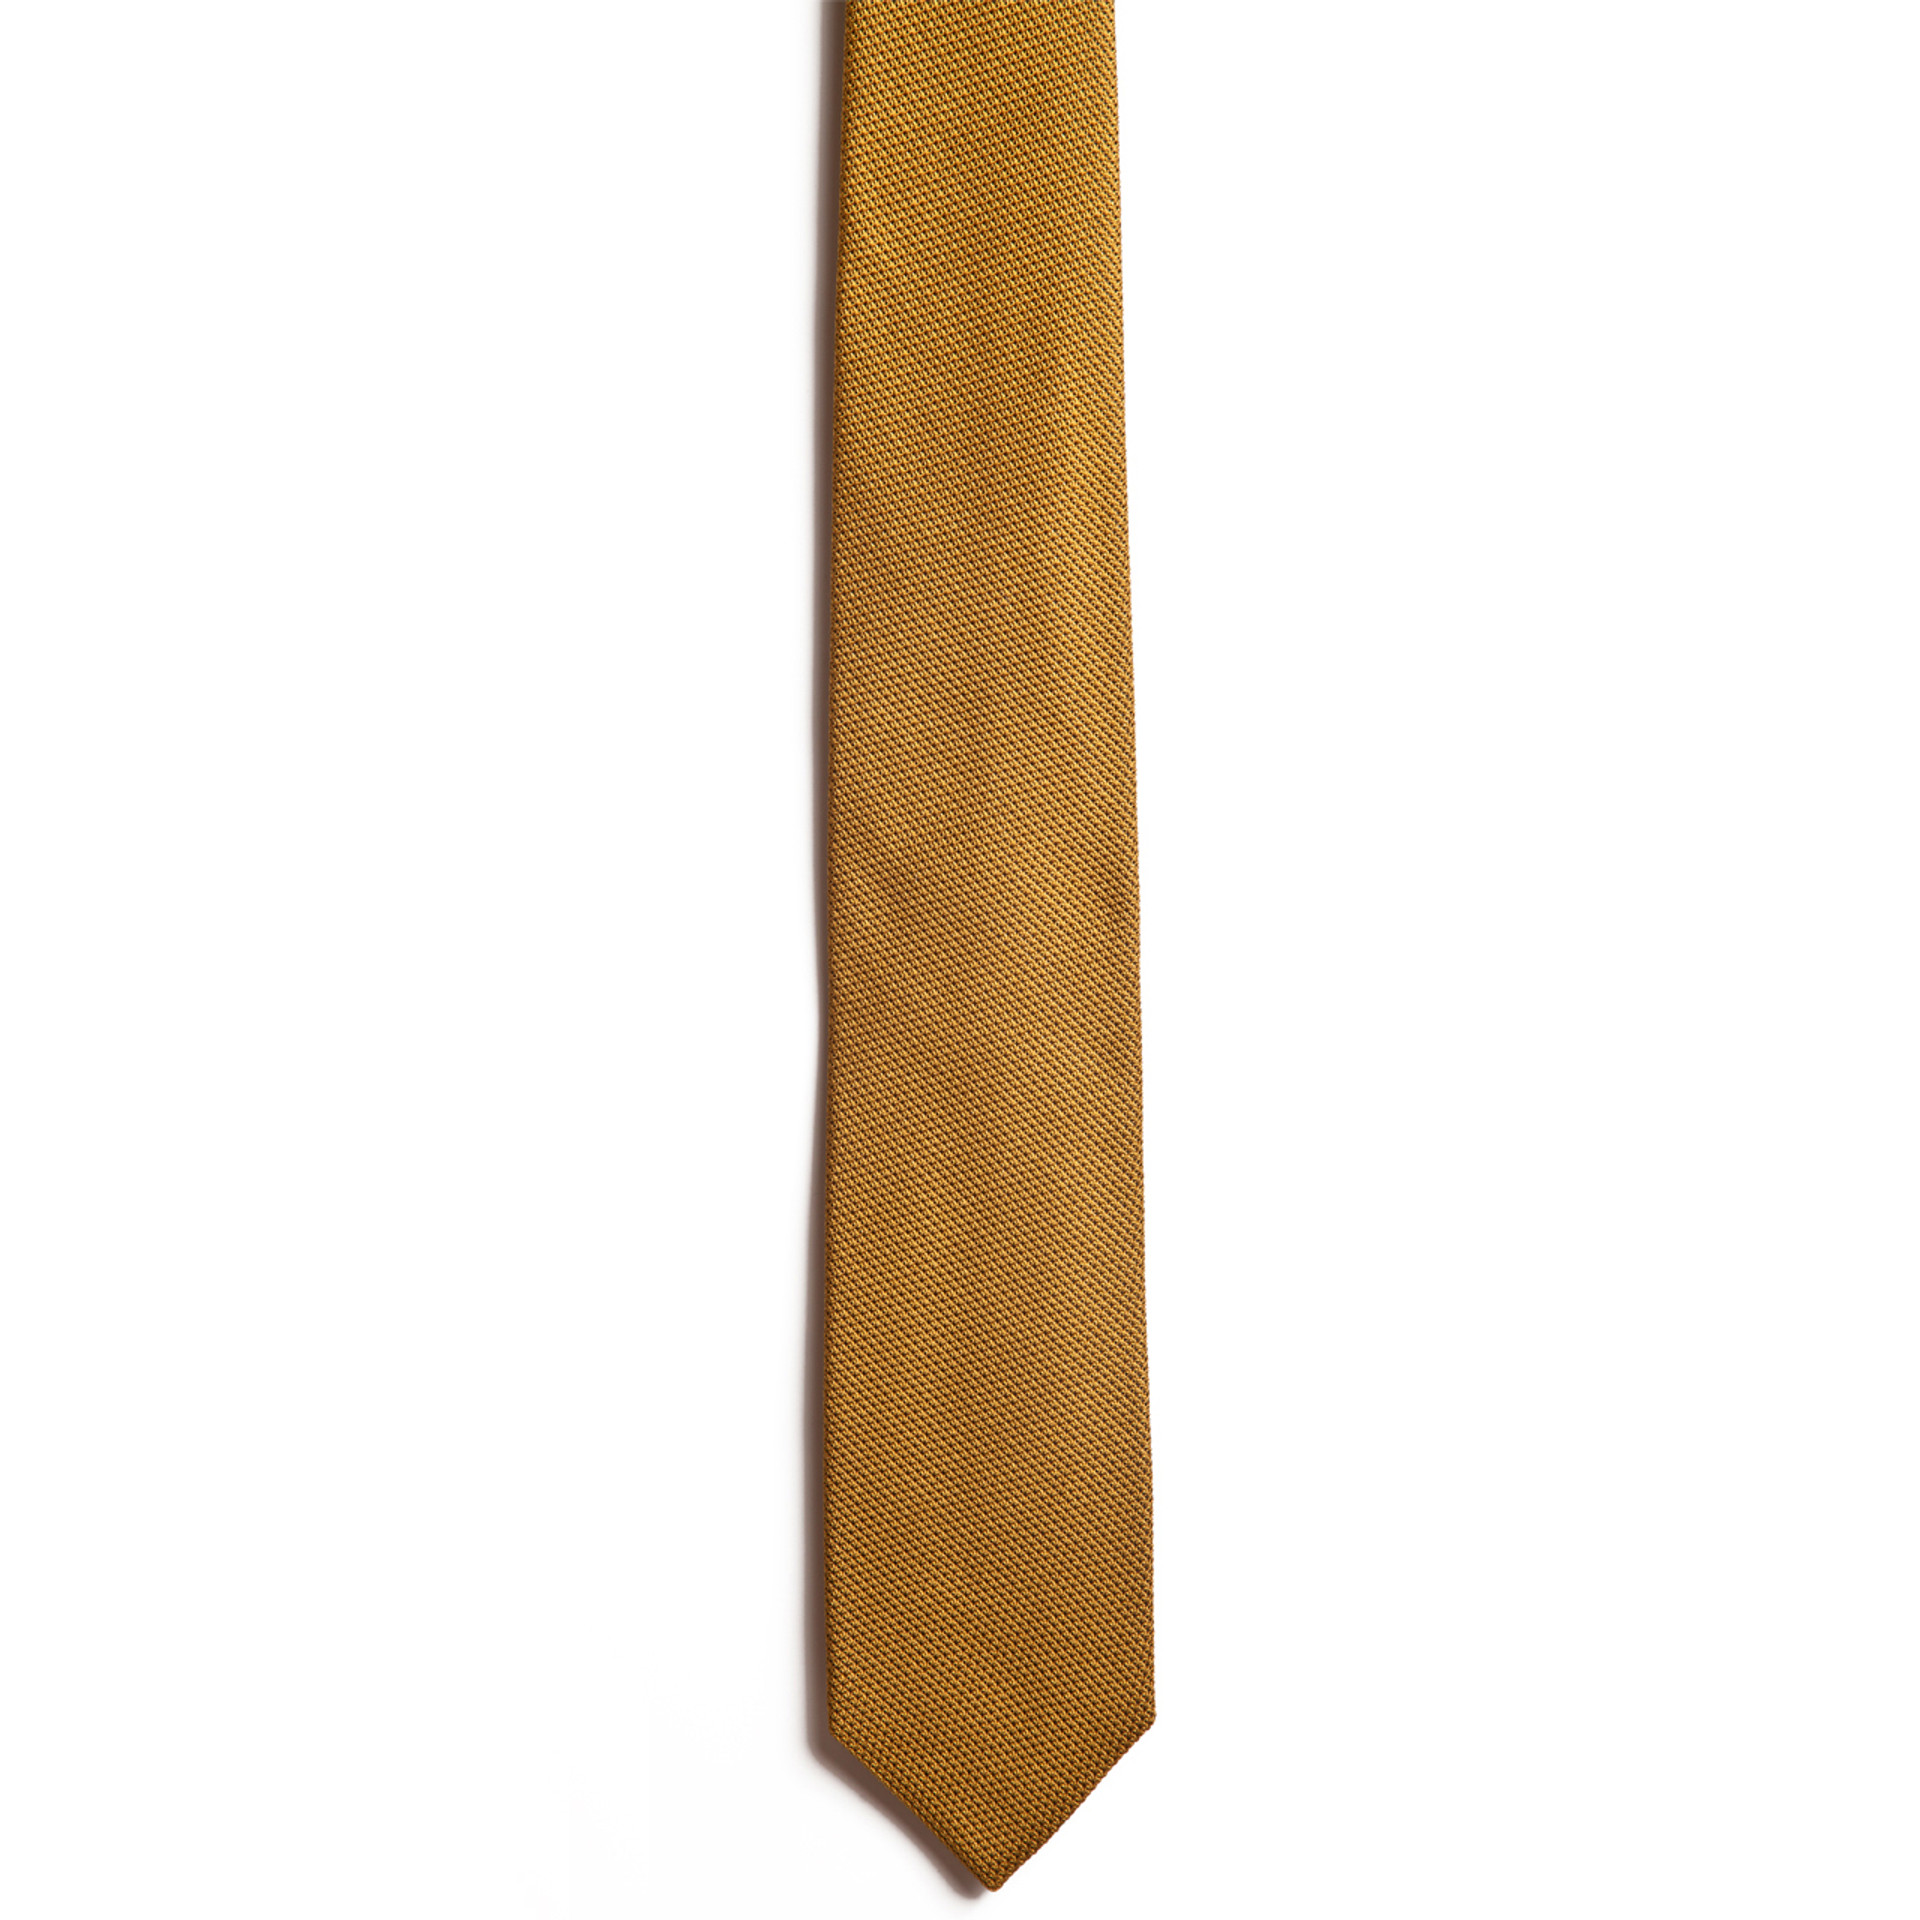 Neckties - Italian Grenadine - Page 1 - Chipp Neckwear